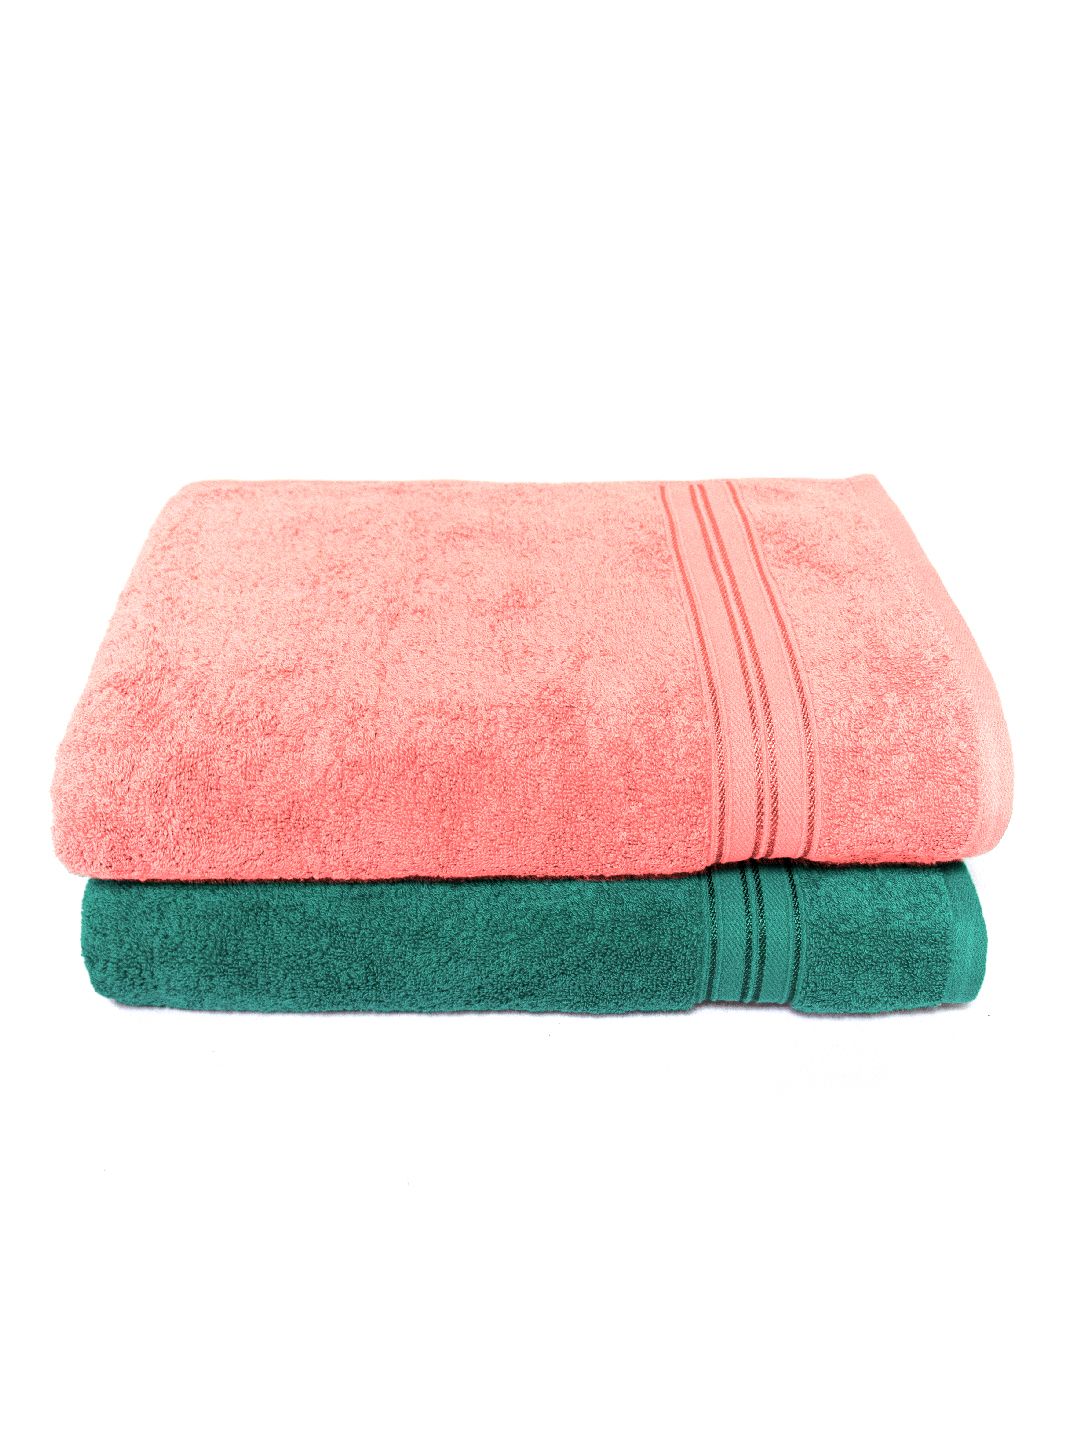 swiss republic Set of 2 Cotton 600 GSM Bath Towel Price in India